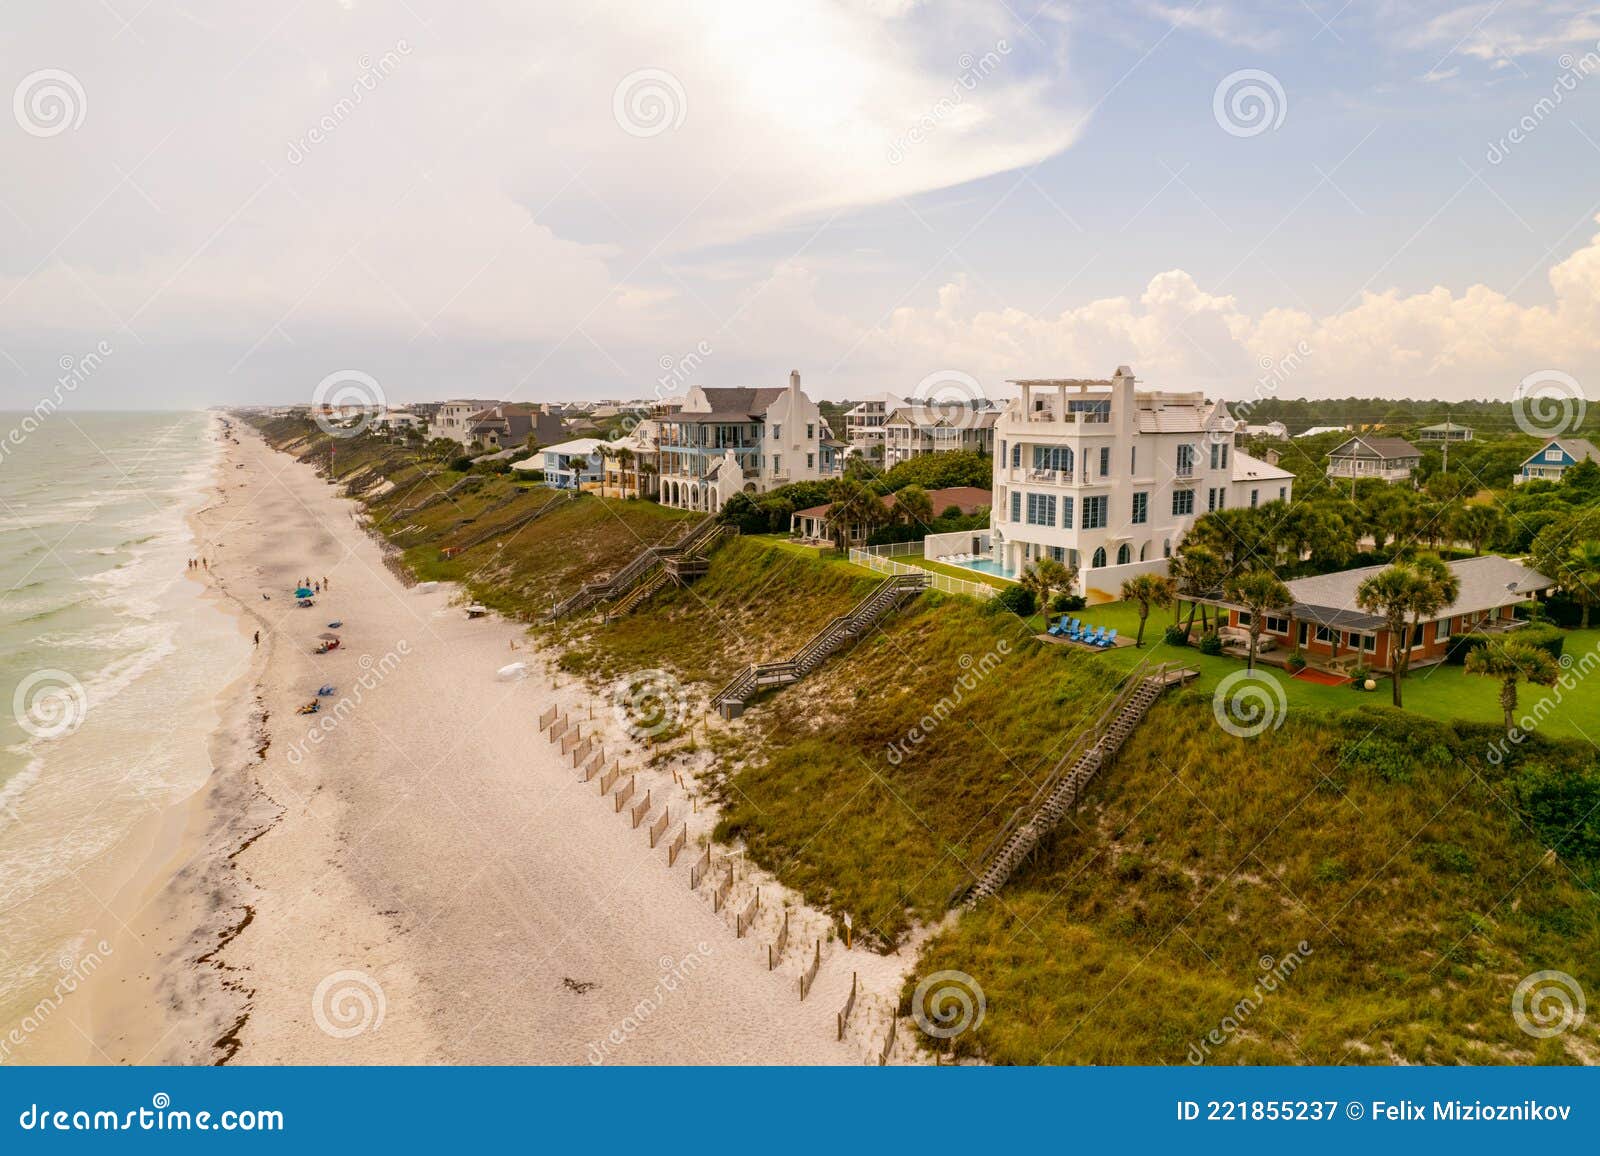 aerial photo upscale homes seaside santa rosa beach fl usa